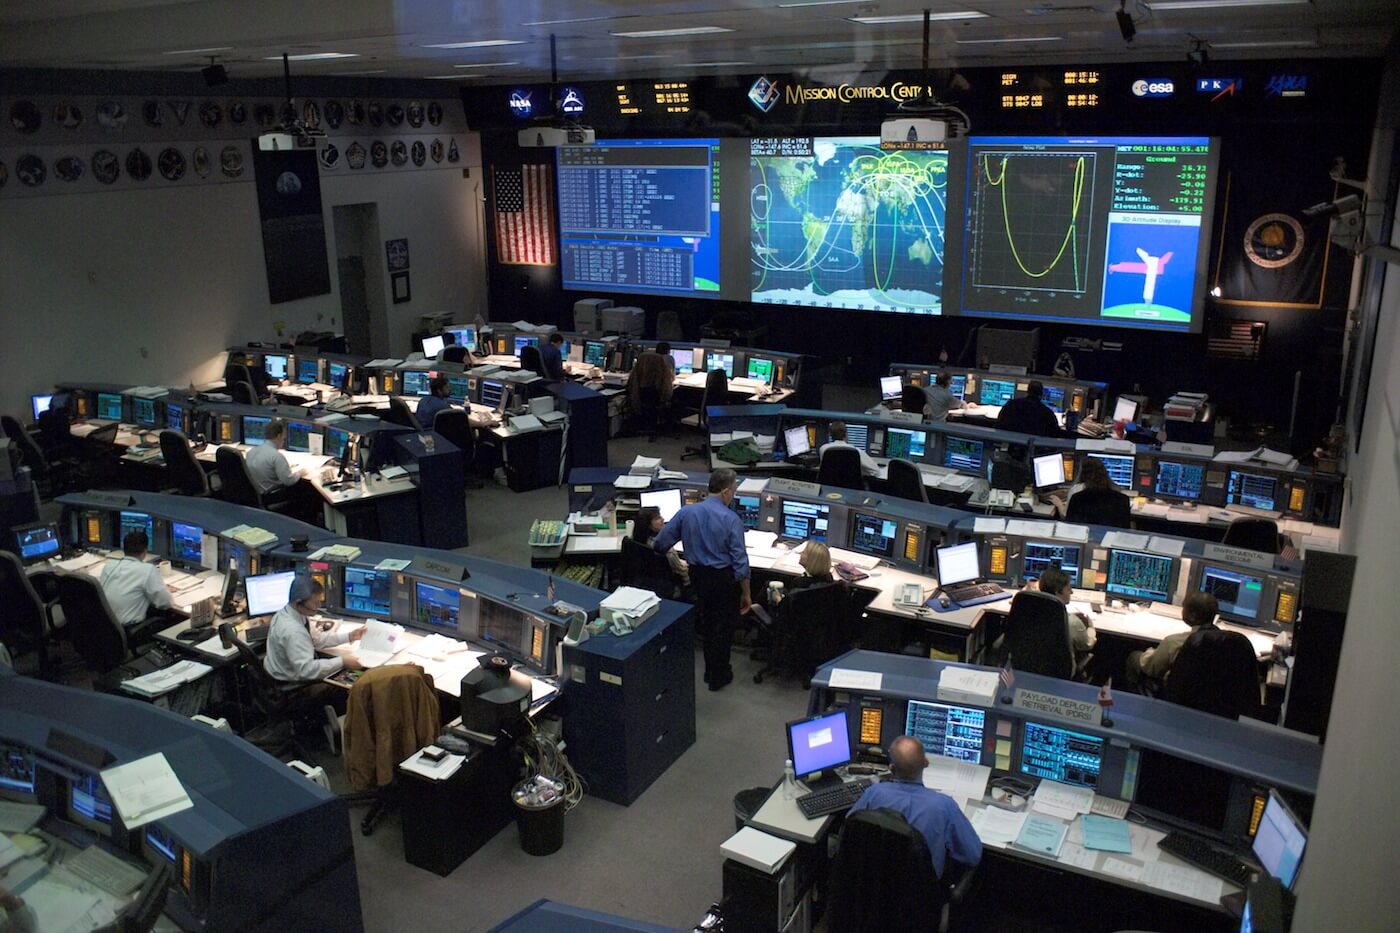 nasa-mission-control-center-monitoring